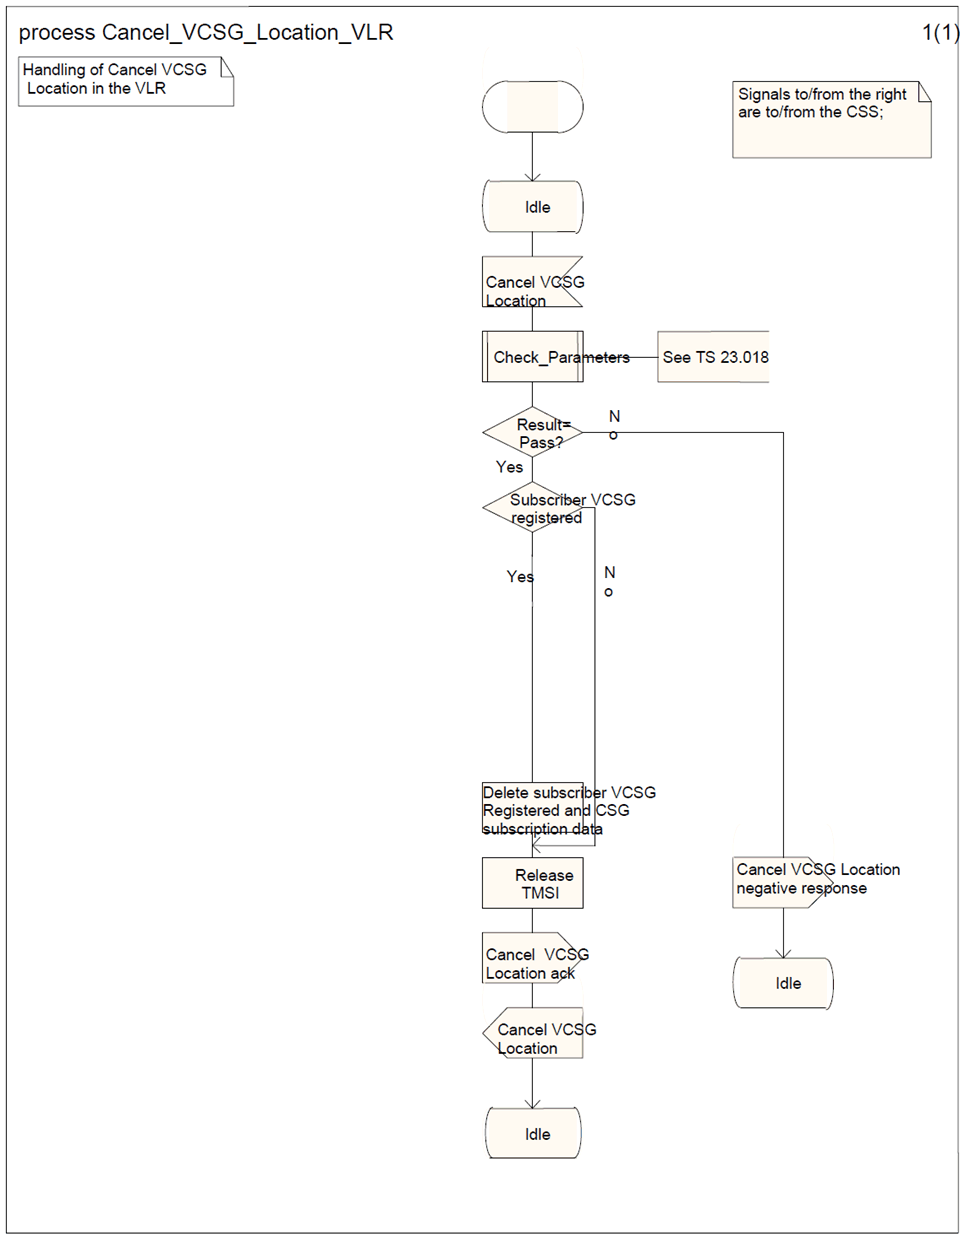 Copy of original 3GPP image for 3GPP TS 23.012, Fig. 4.2A.1.1-1: (Sheet 1 of 1) Process Cancel_VCSG_Location_VLR 